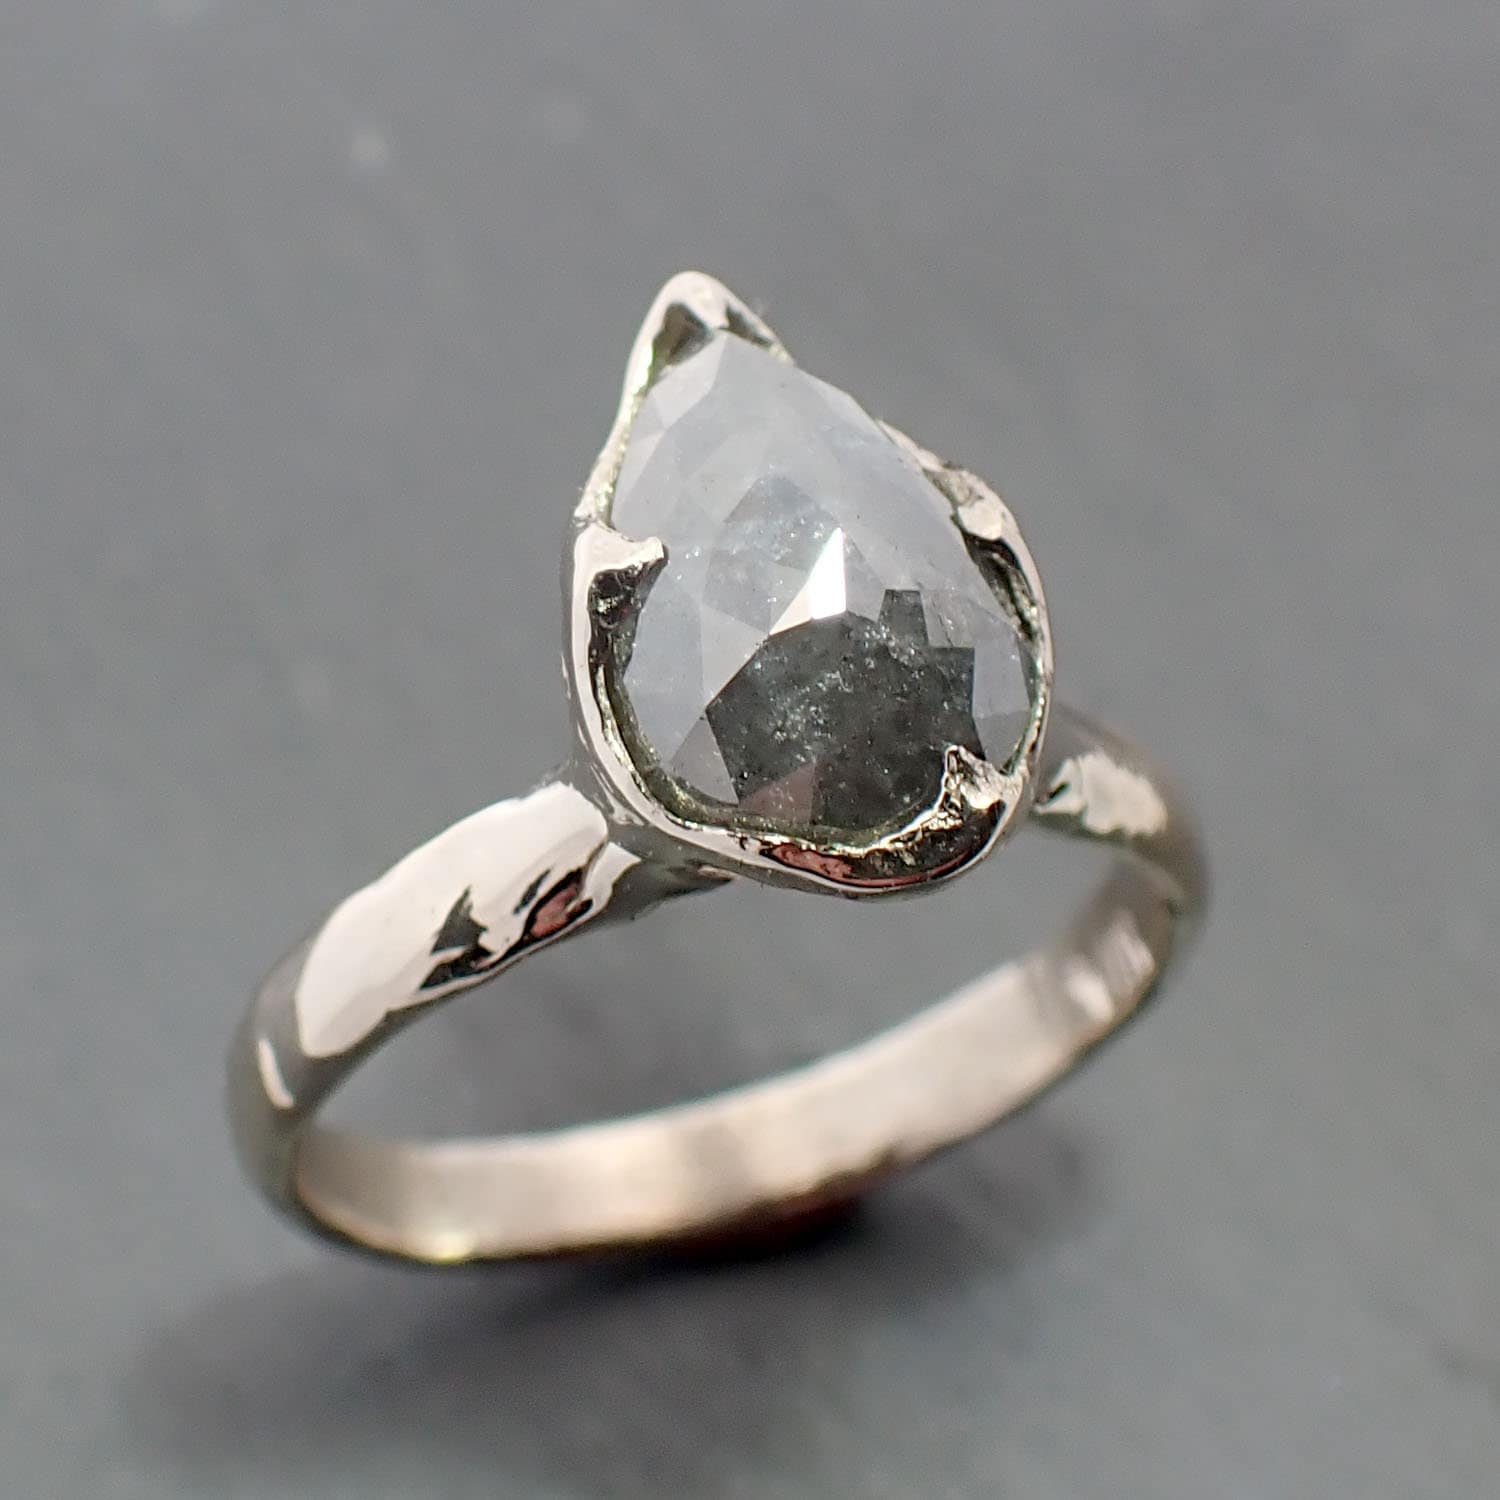 Fancy cut salt and pepper Diamond Solitaire Engagement 14k White Gold Wedding Ring byAngeline 3421